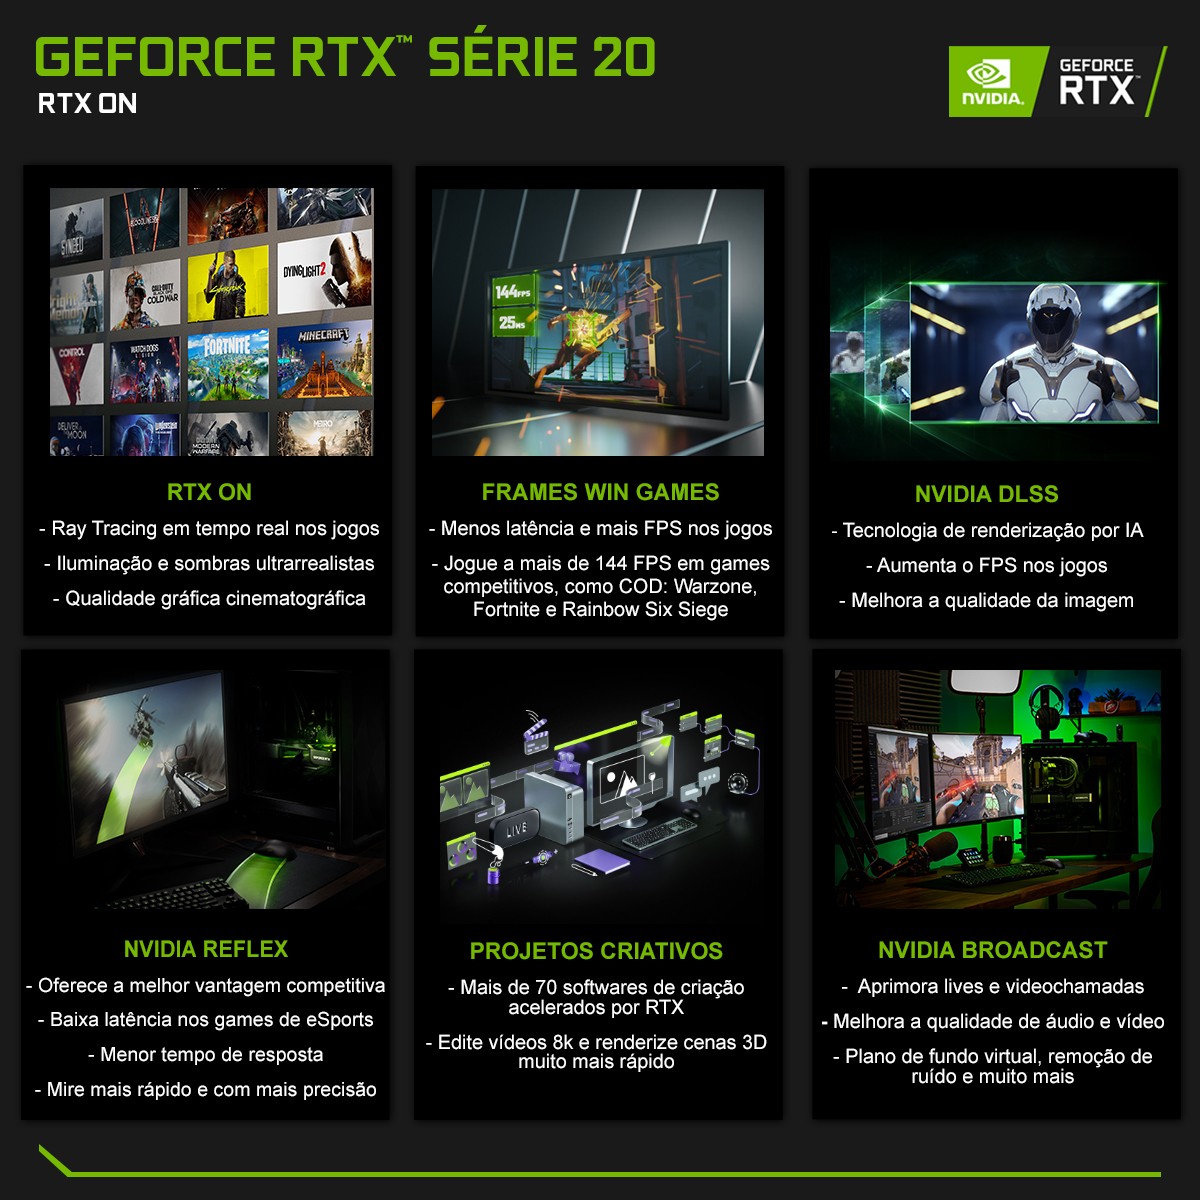 Placa De Vídeo Gigabyte Geforce RTX 2080 Gaming OC 8GB GV-N2080GAMING OC-8GC GDDR6 PCI-EXP